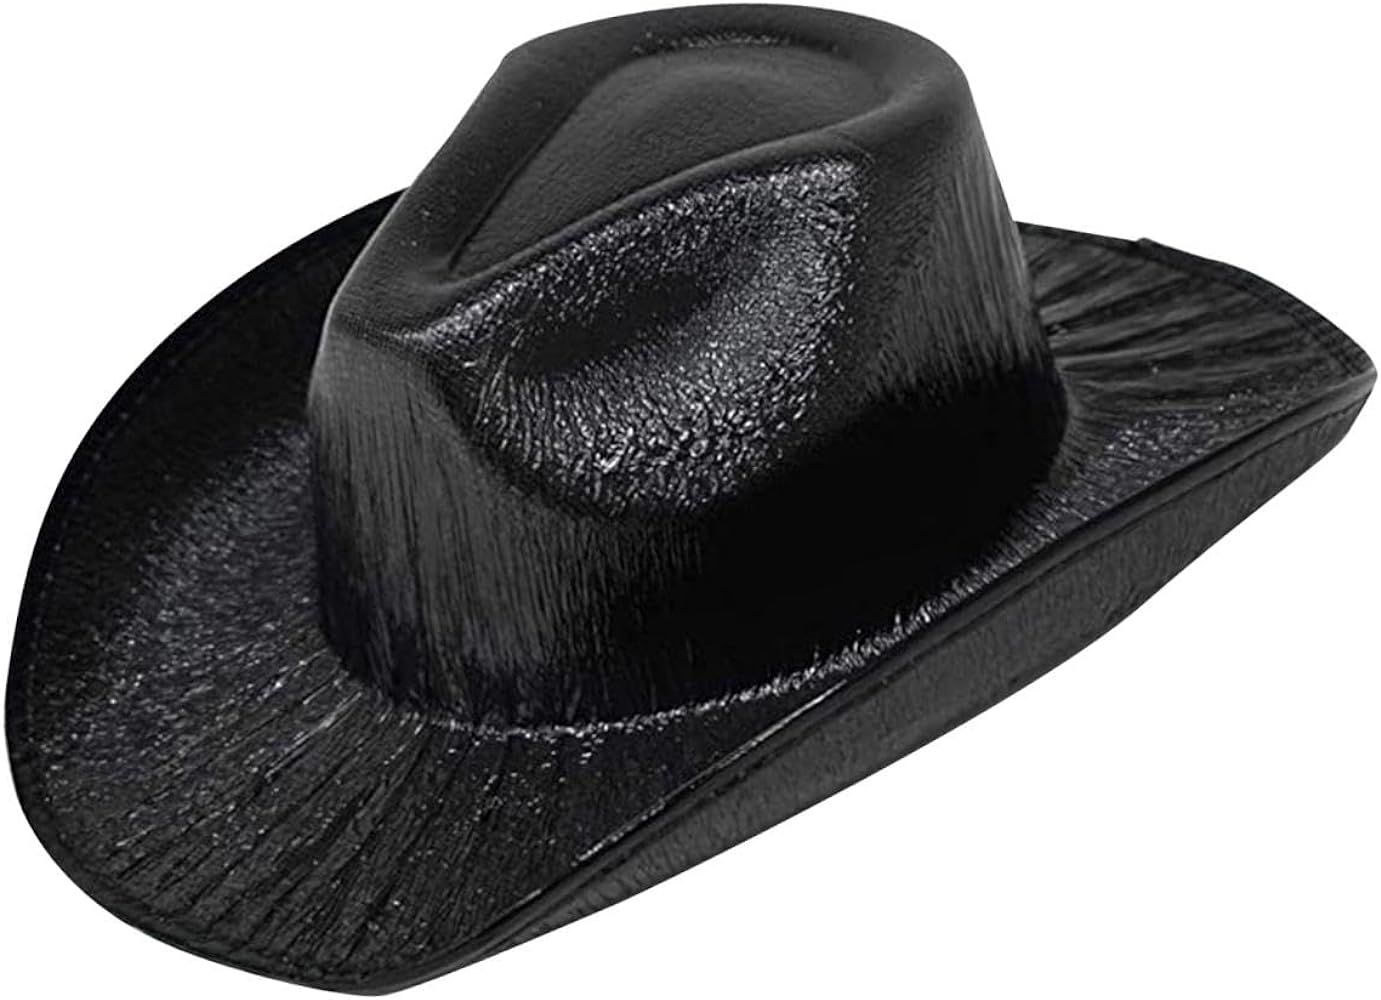 Neon Hologramlı Kovboy Model Parti Şapkası Siyah Yetişkin 39X36X14 cm (Lisinya)